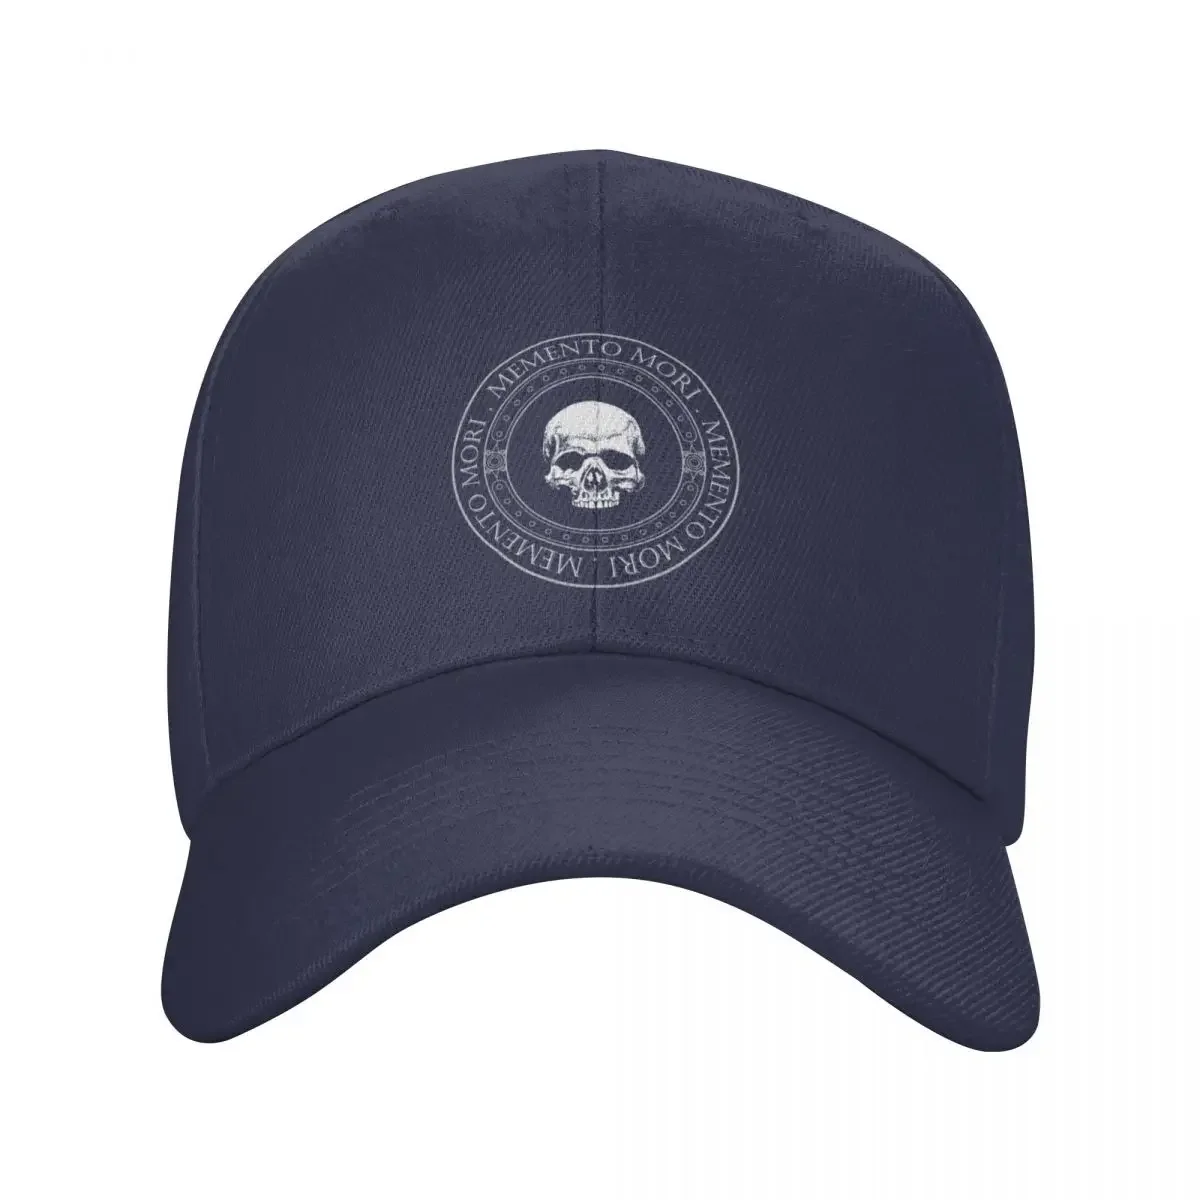 

Memento Mori III - Memento Mori Art - Skeleton Skull Logo - Latin Phrase Quotes Baseball Cap Beach Hat For Men Women'S